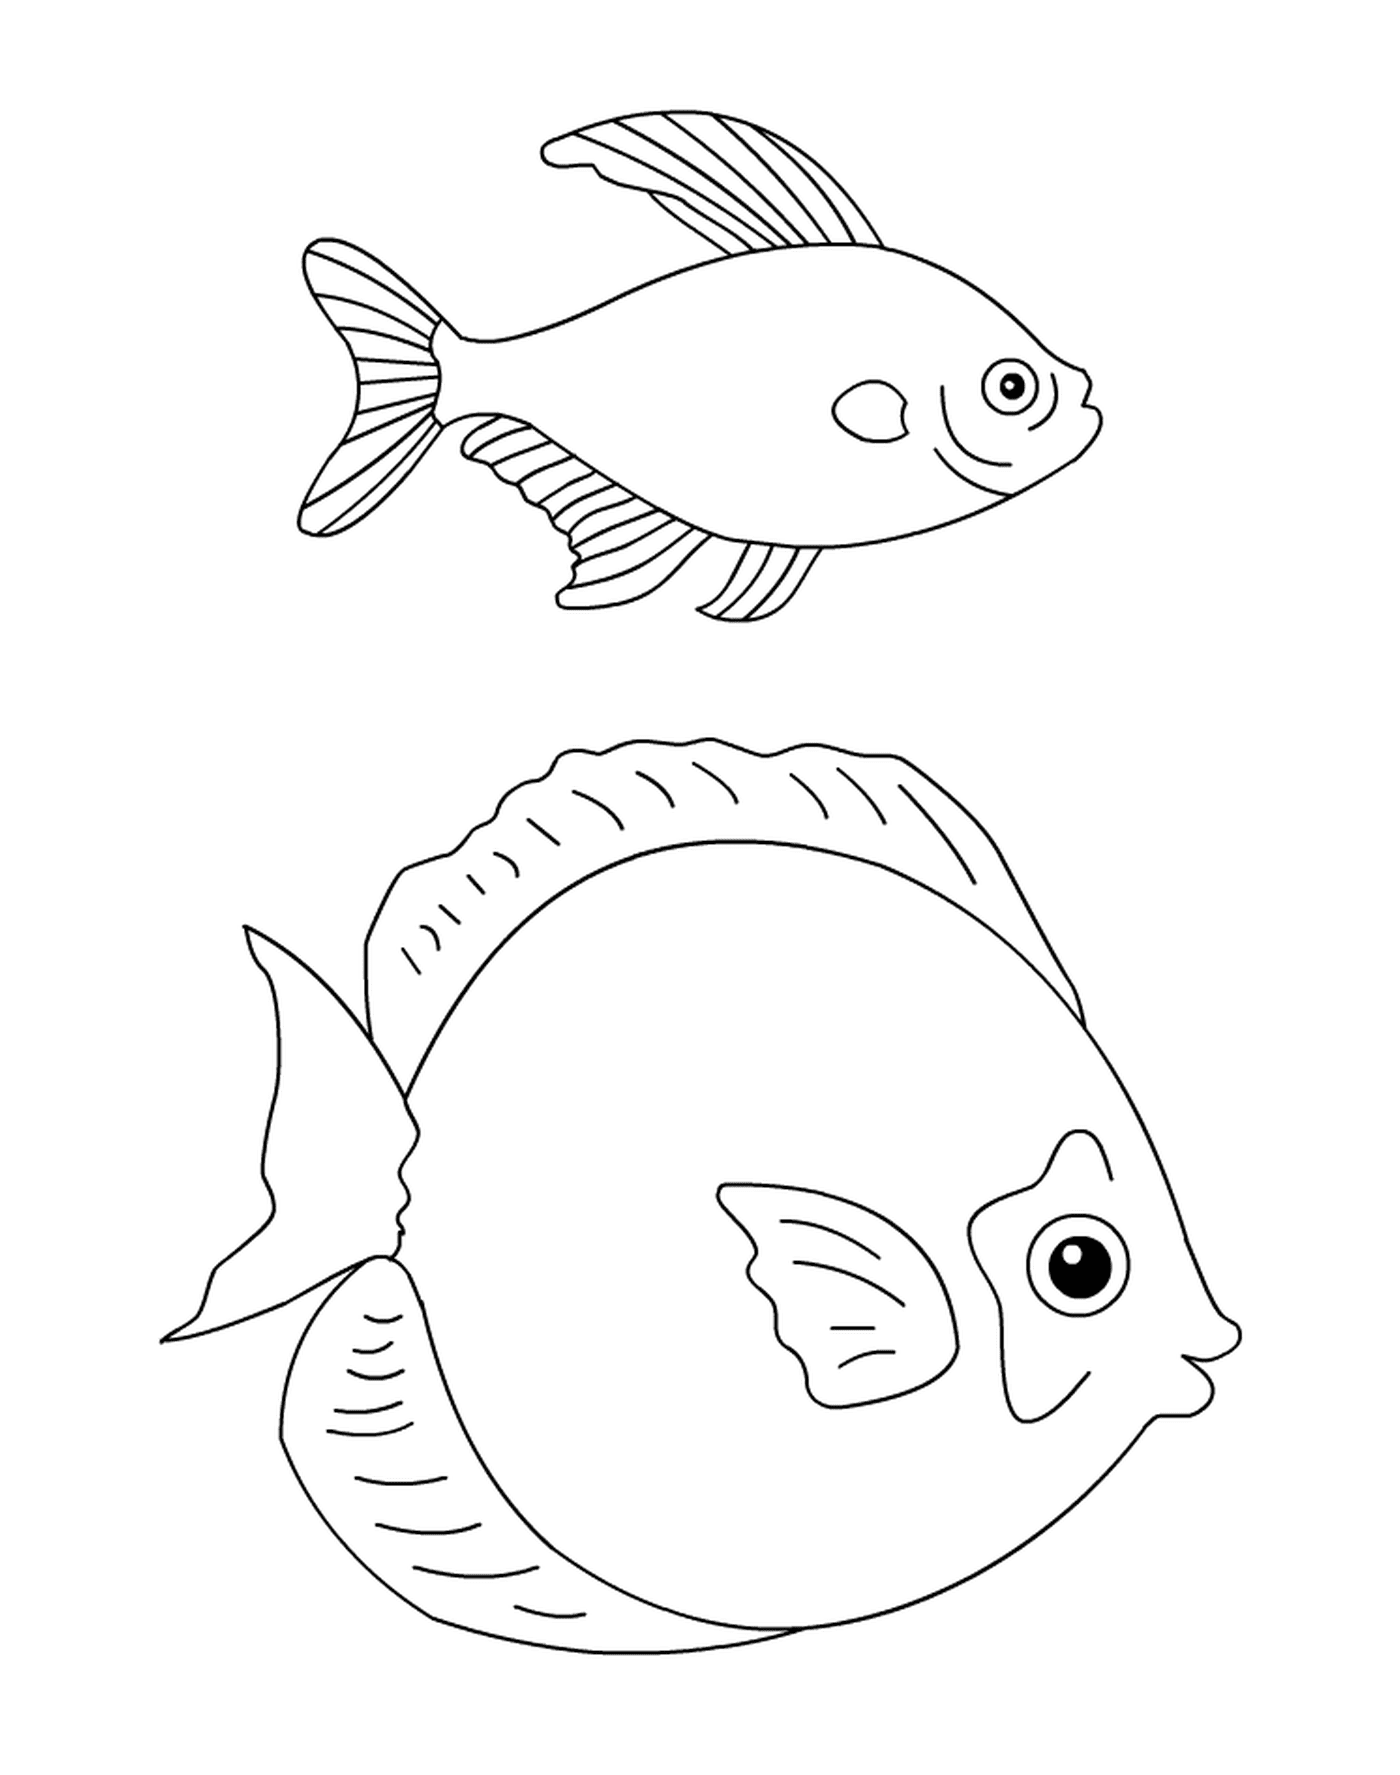  Un pesce e un animale disegnati insieme 